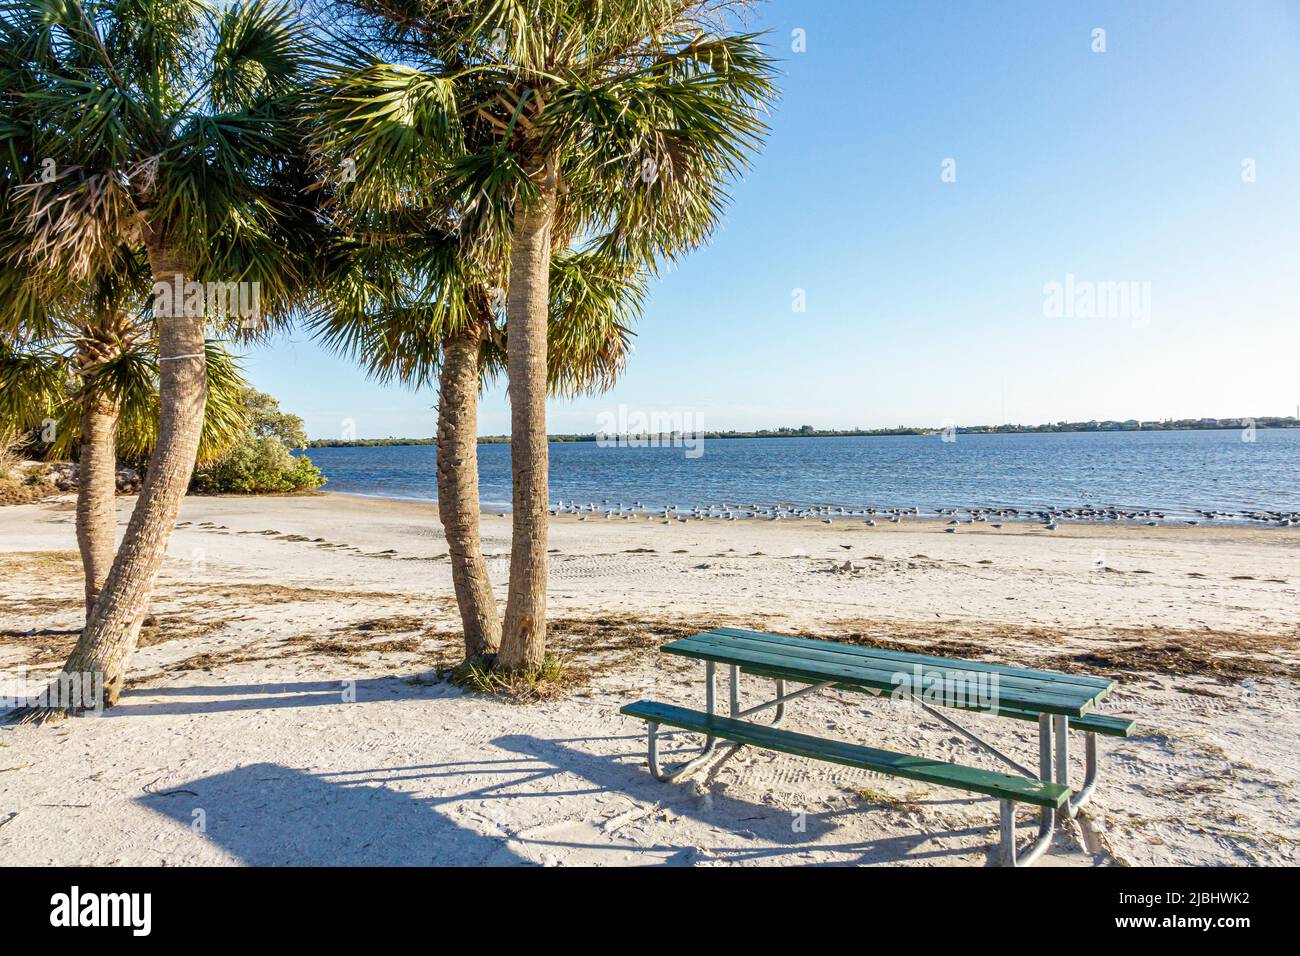 Florida New Port Richey,Green Key,Robert K Rees Memorial Park,Gulf of Mexico,public beach sand sabal palms palm trees Stock Photo